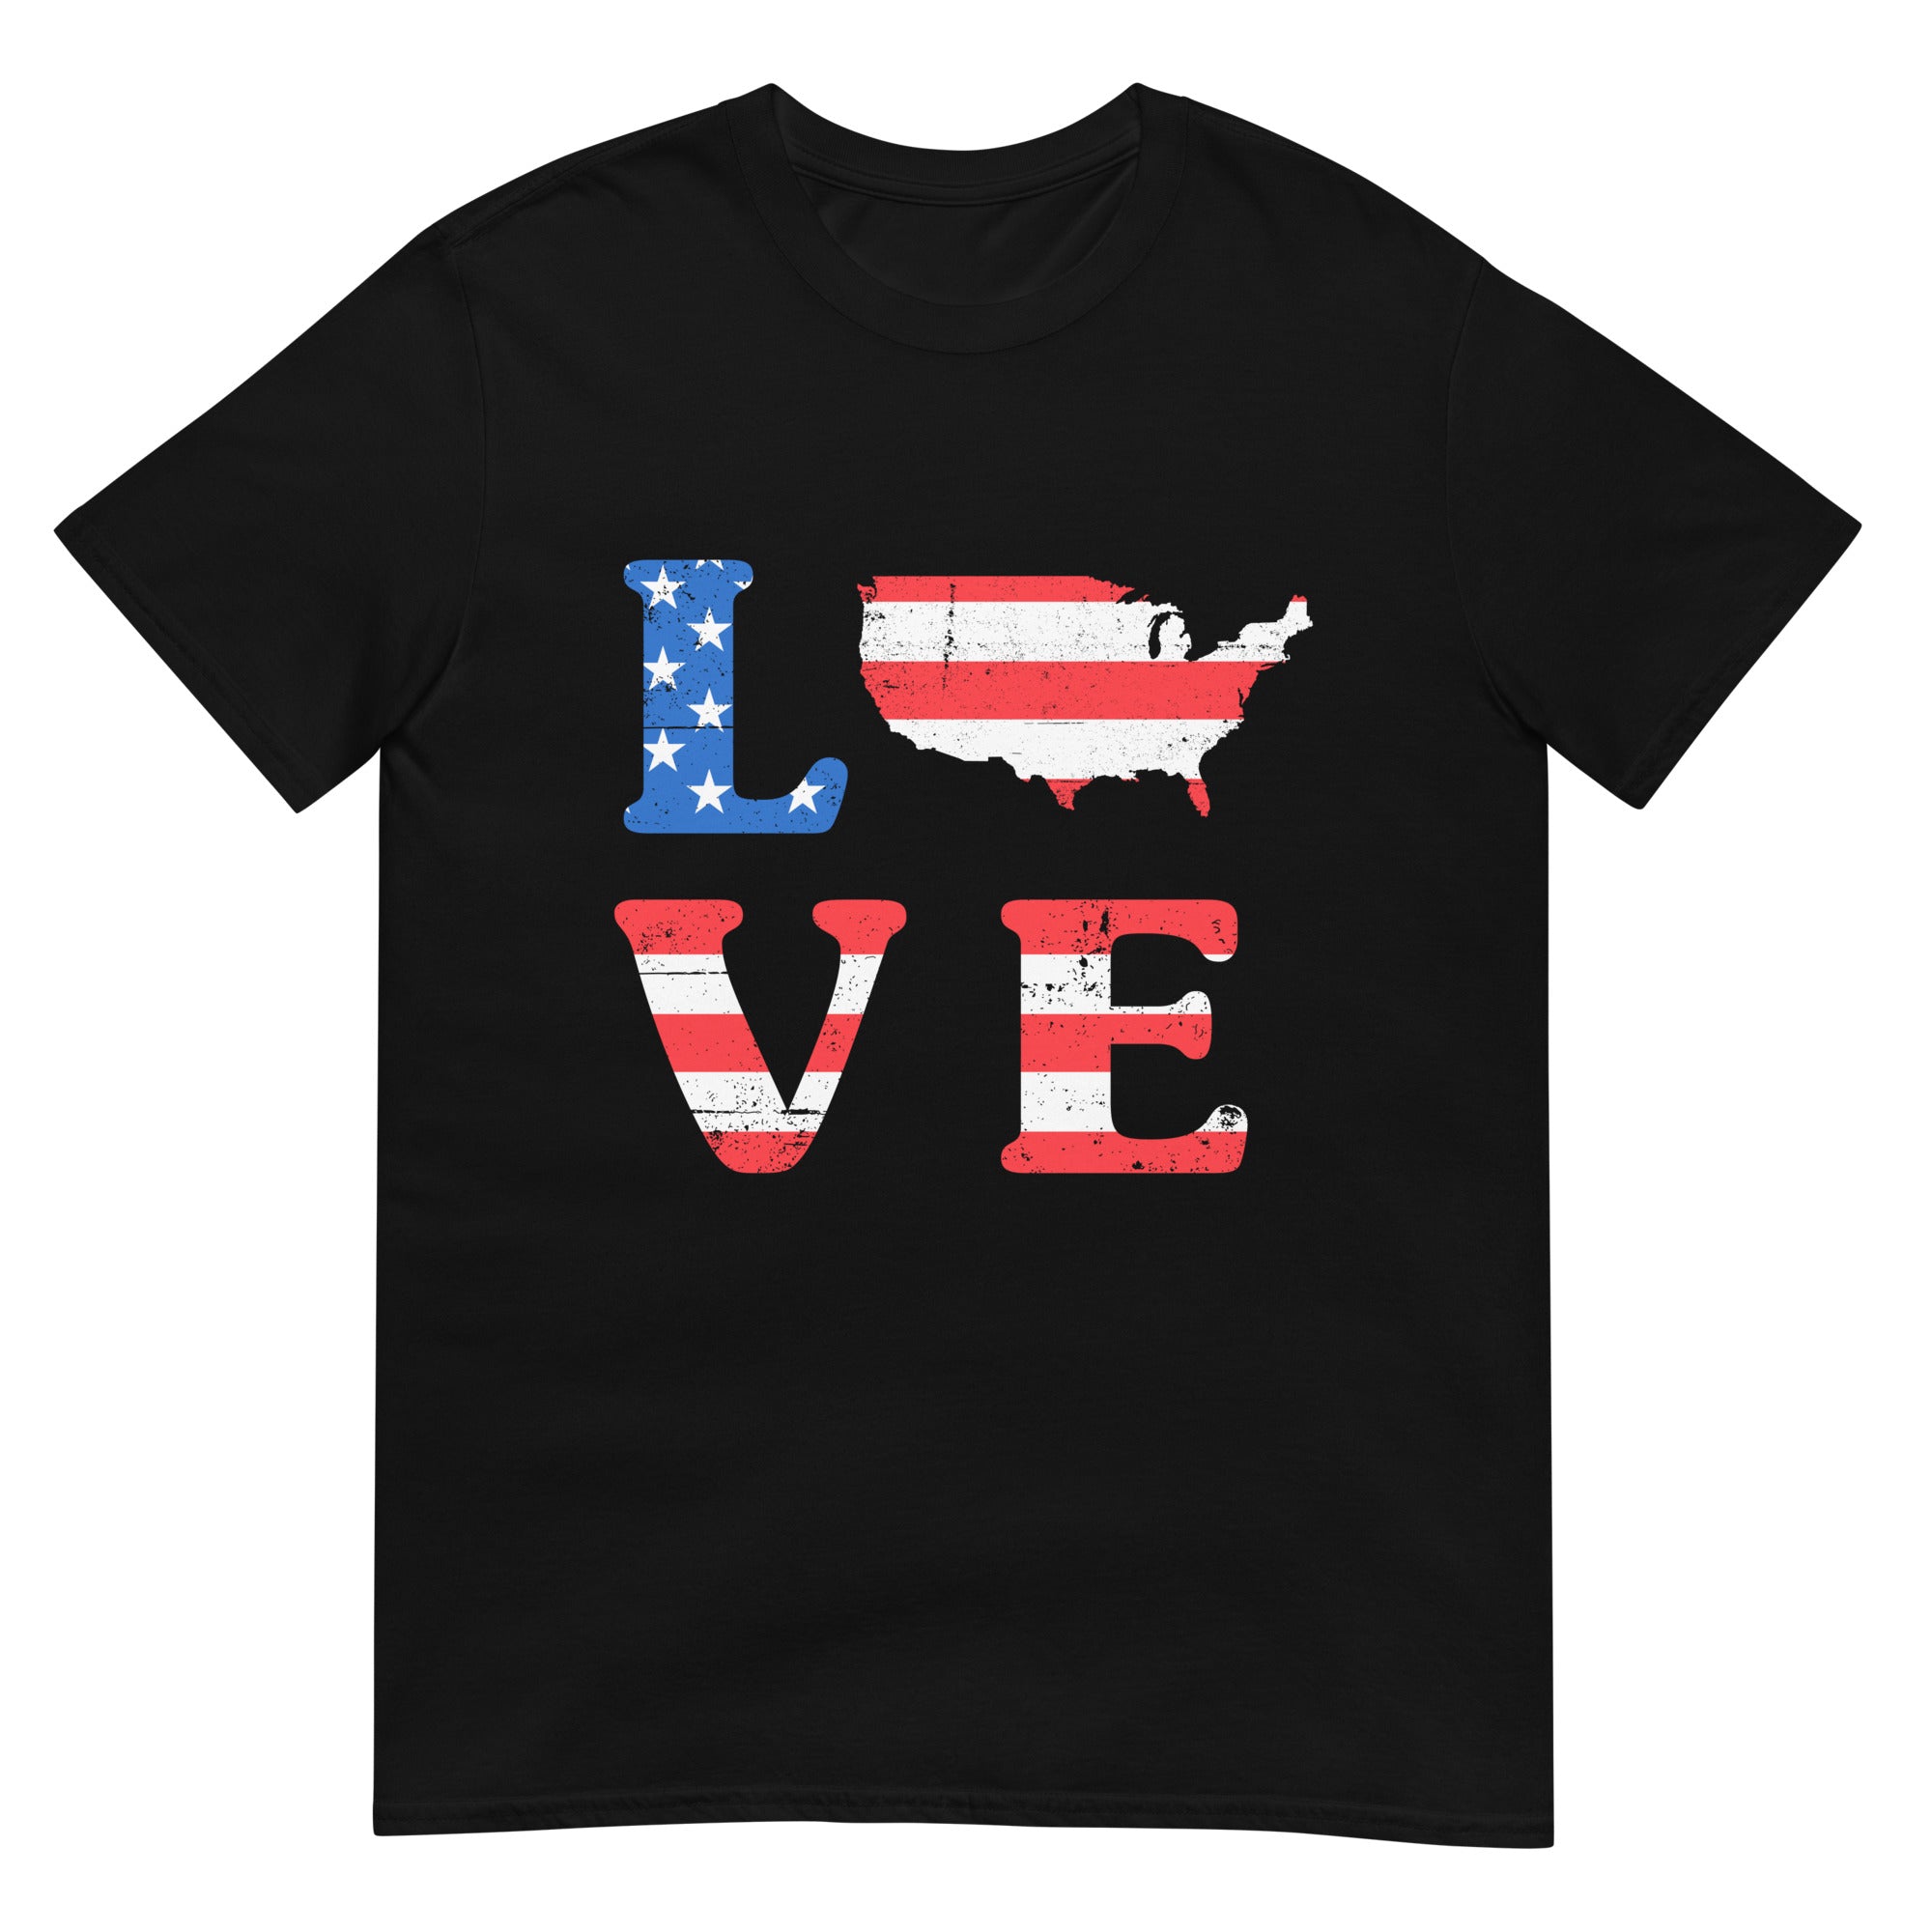 Love America Short-Sleeve Unisex T-Shirt